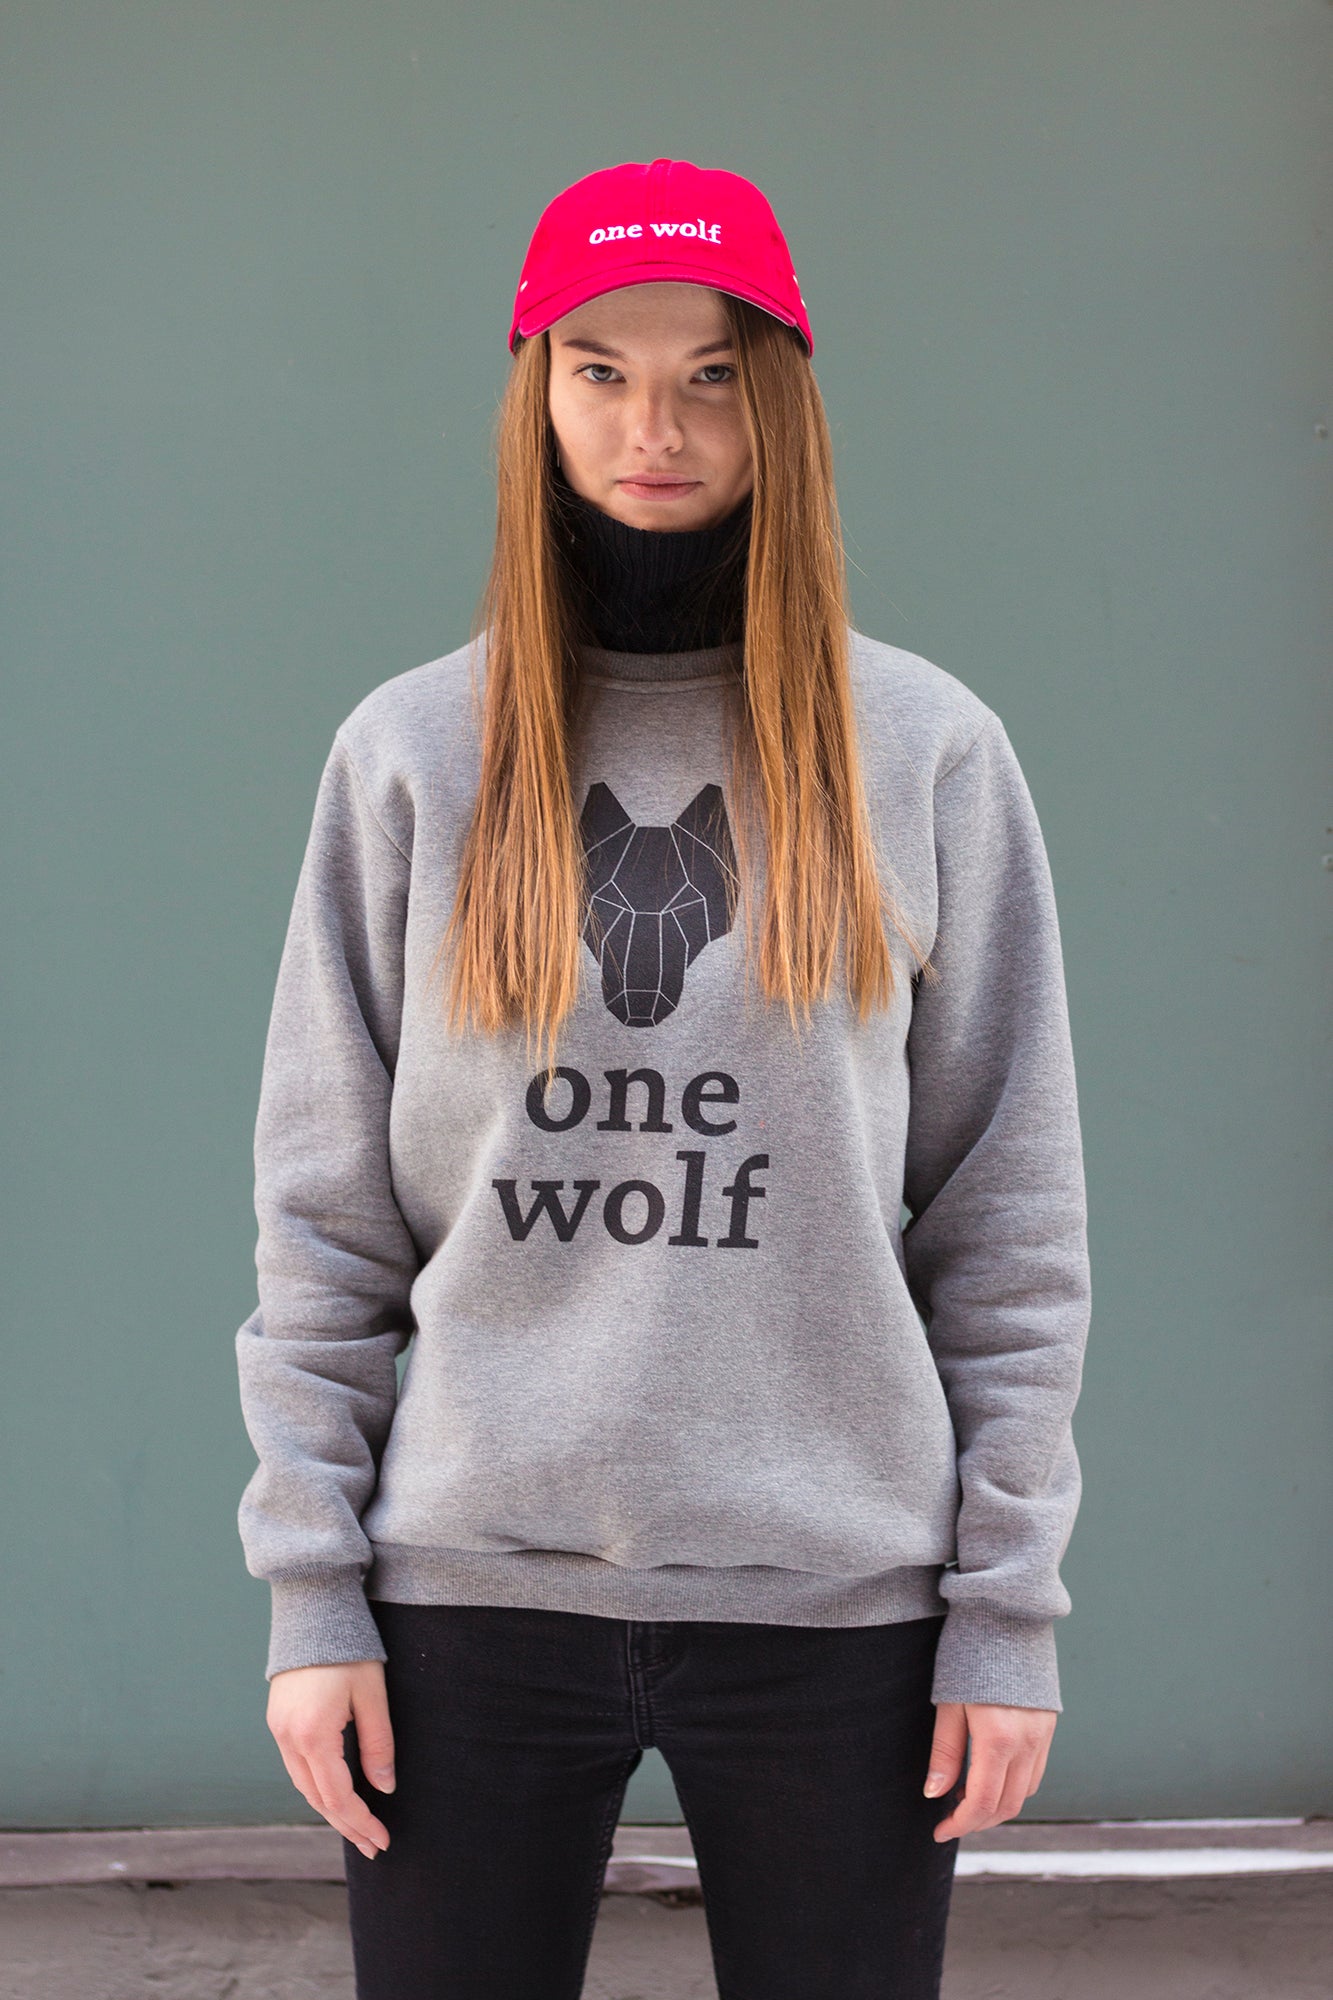 ONE WOLF LOGO sweater grey/black logo - One Wolf